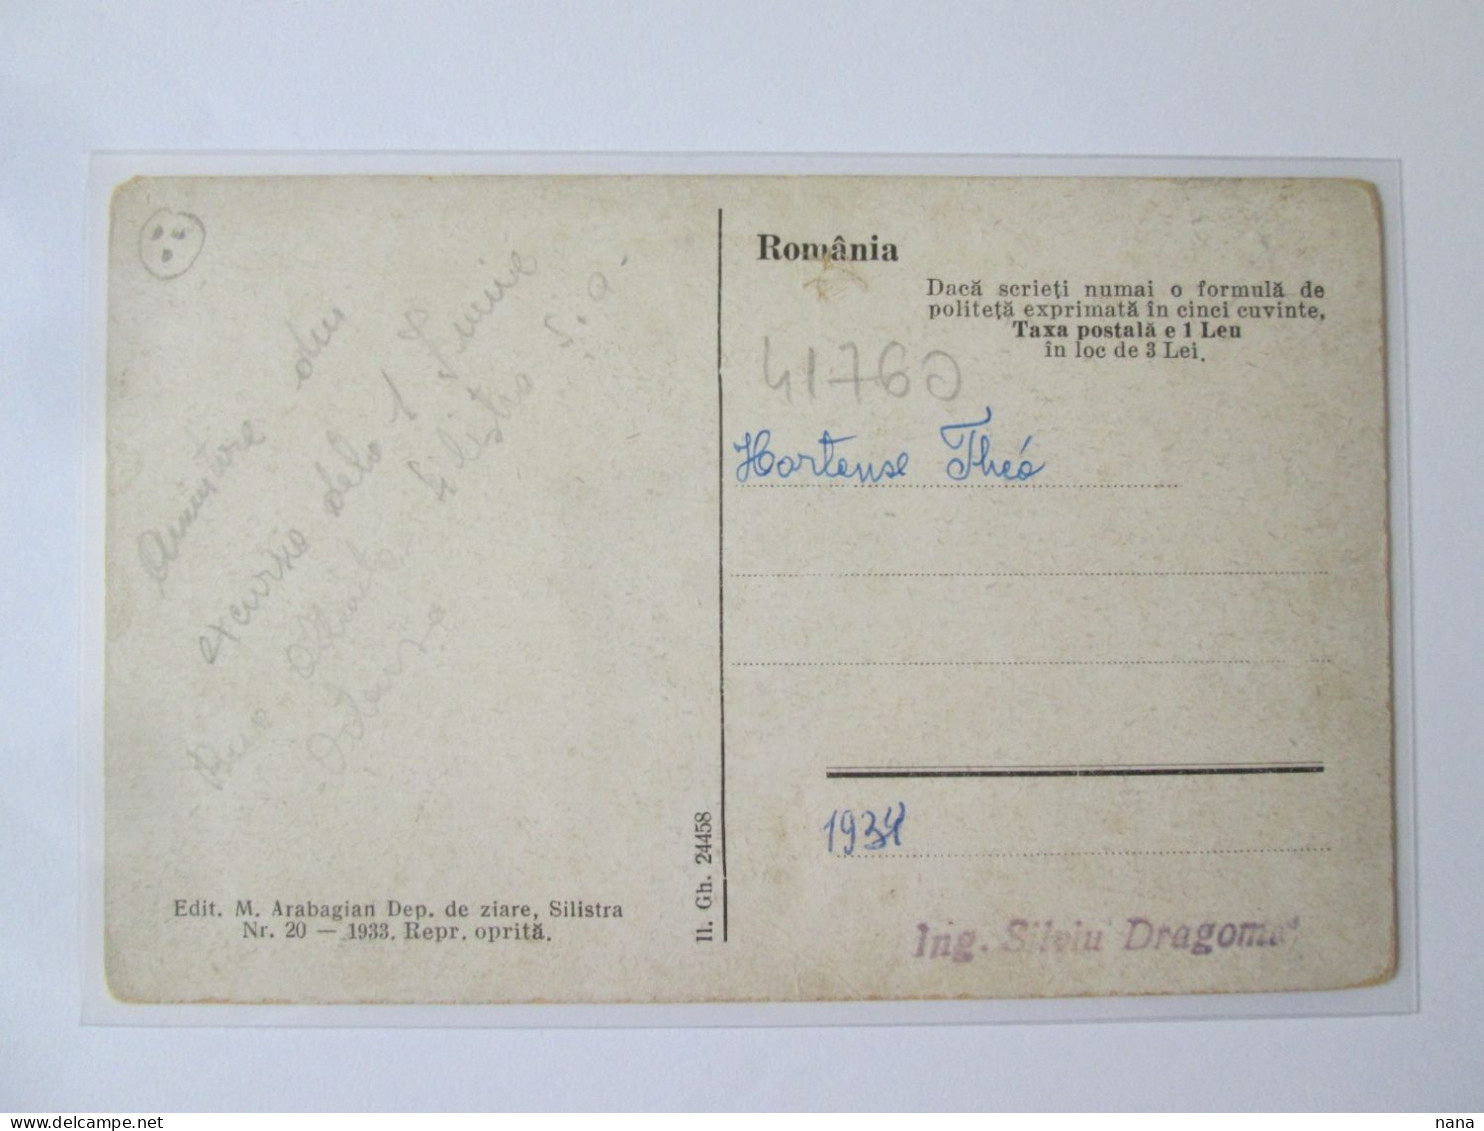 Bulgaria Former Romania-Silistra:Mahala Turcească/Turkish Slum 1933 Written Postcard,see Pictures - Bulgaria